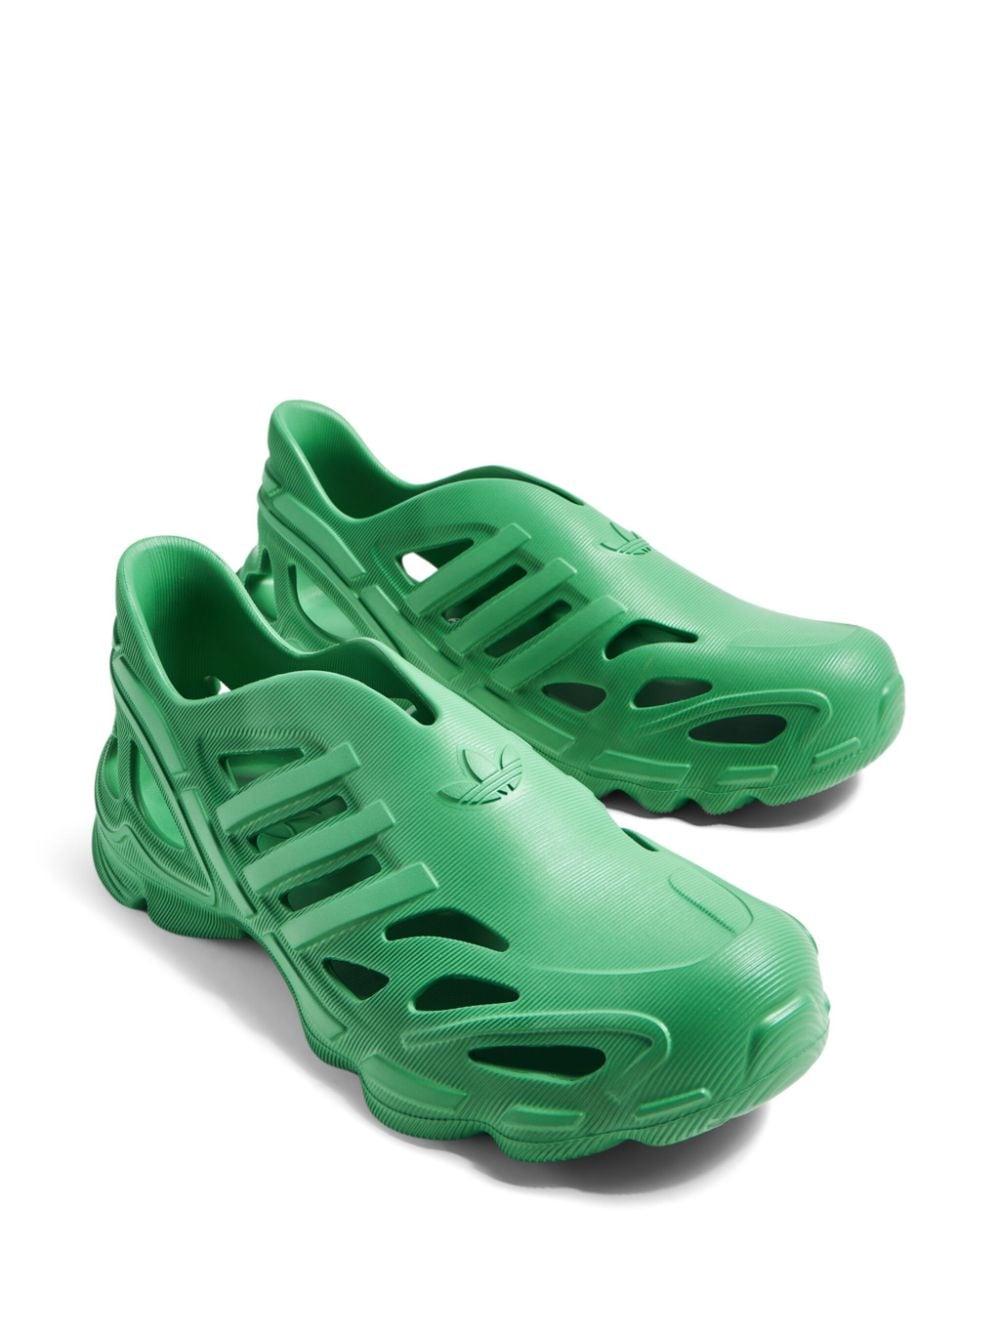 adidas Adifom Supernova Shoes - Green, Men's Lifestyle